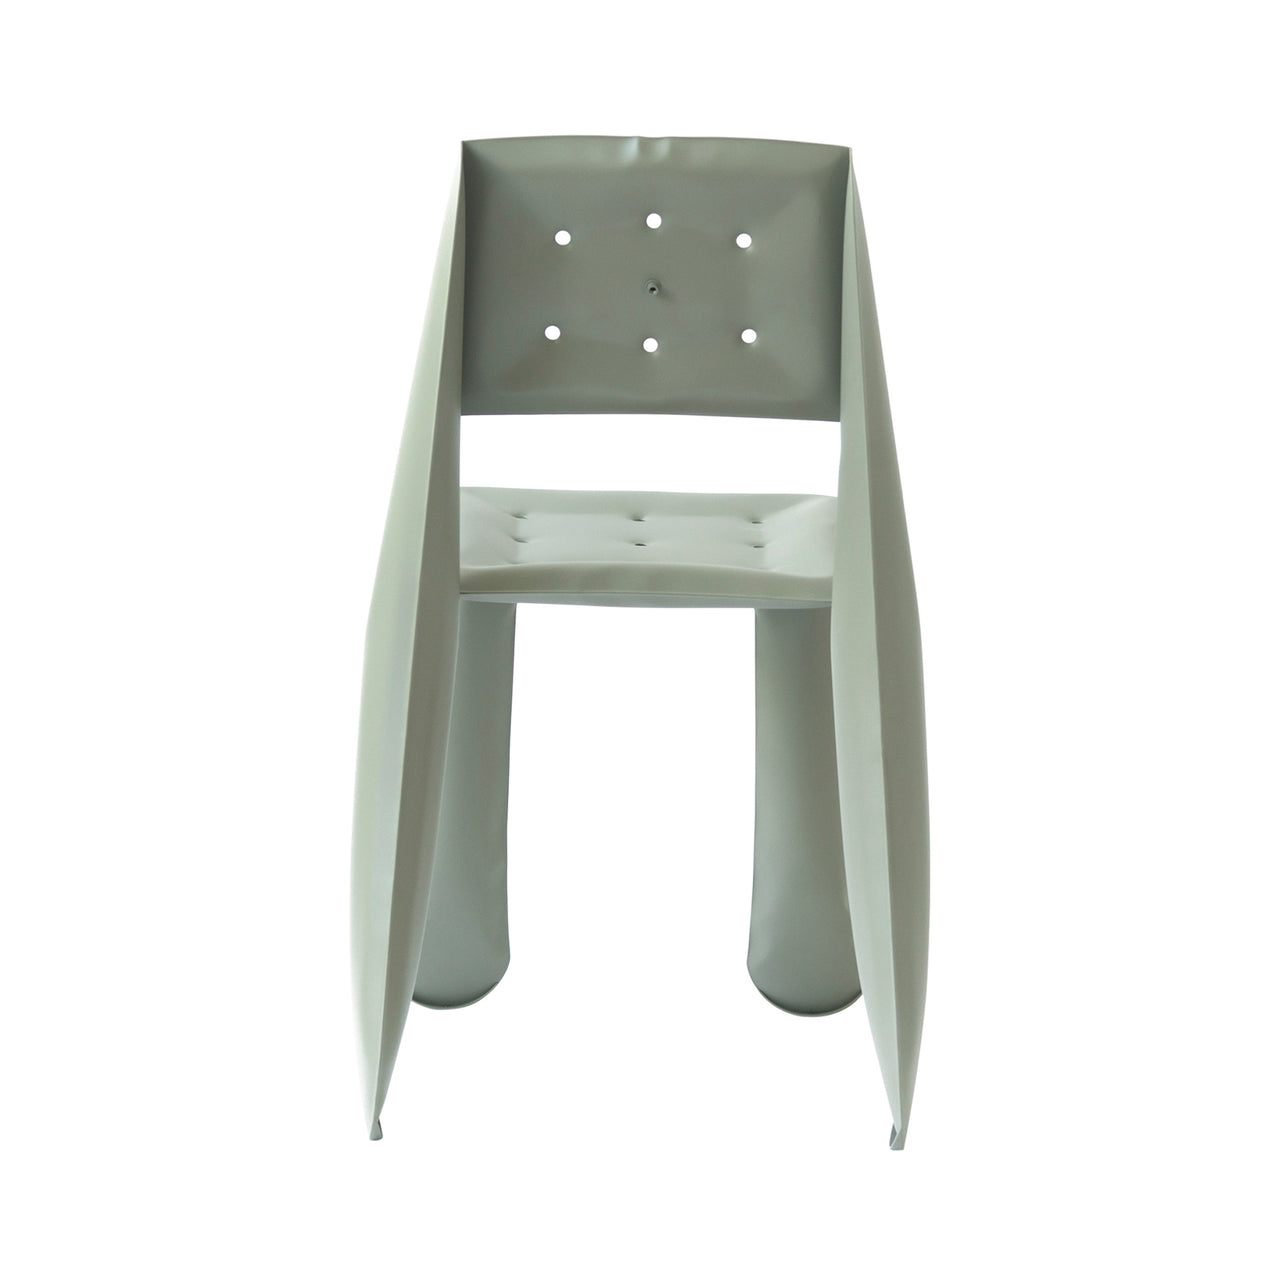 Chippensteel 0.5 Chair: Moss Grey Aluminum